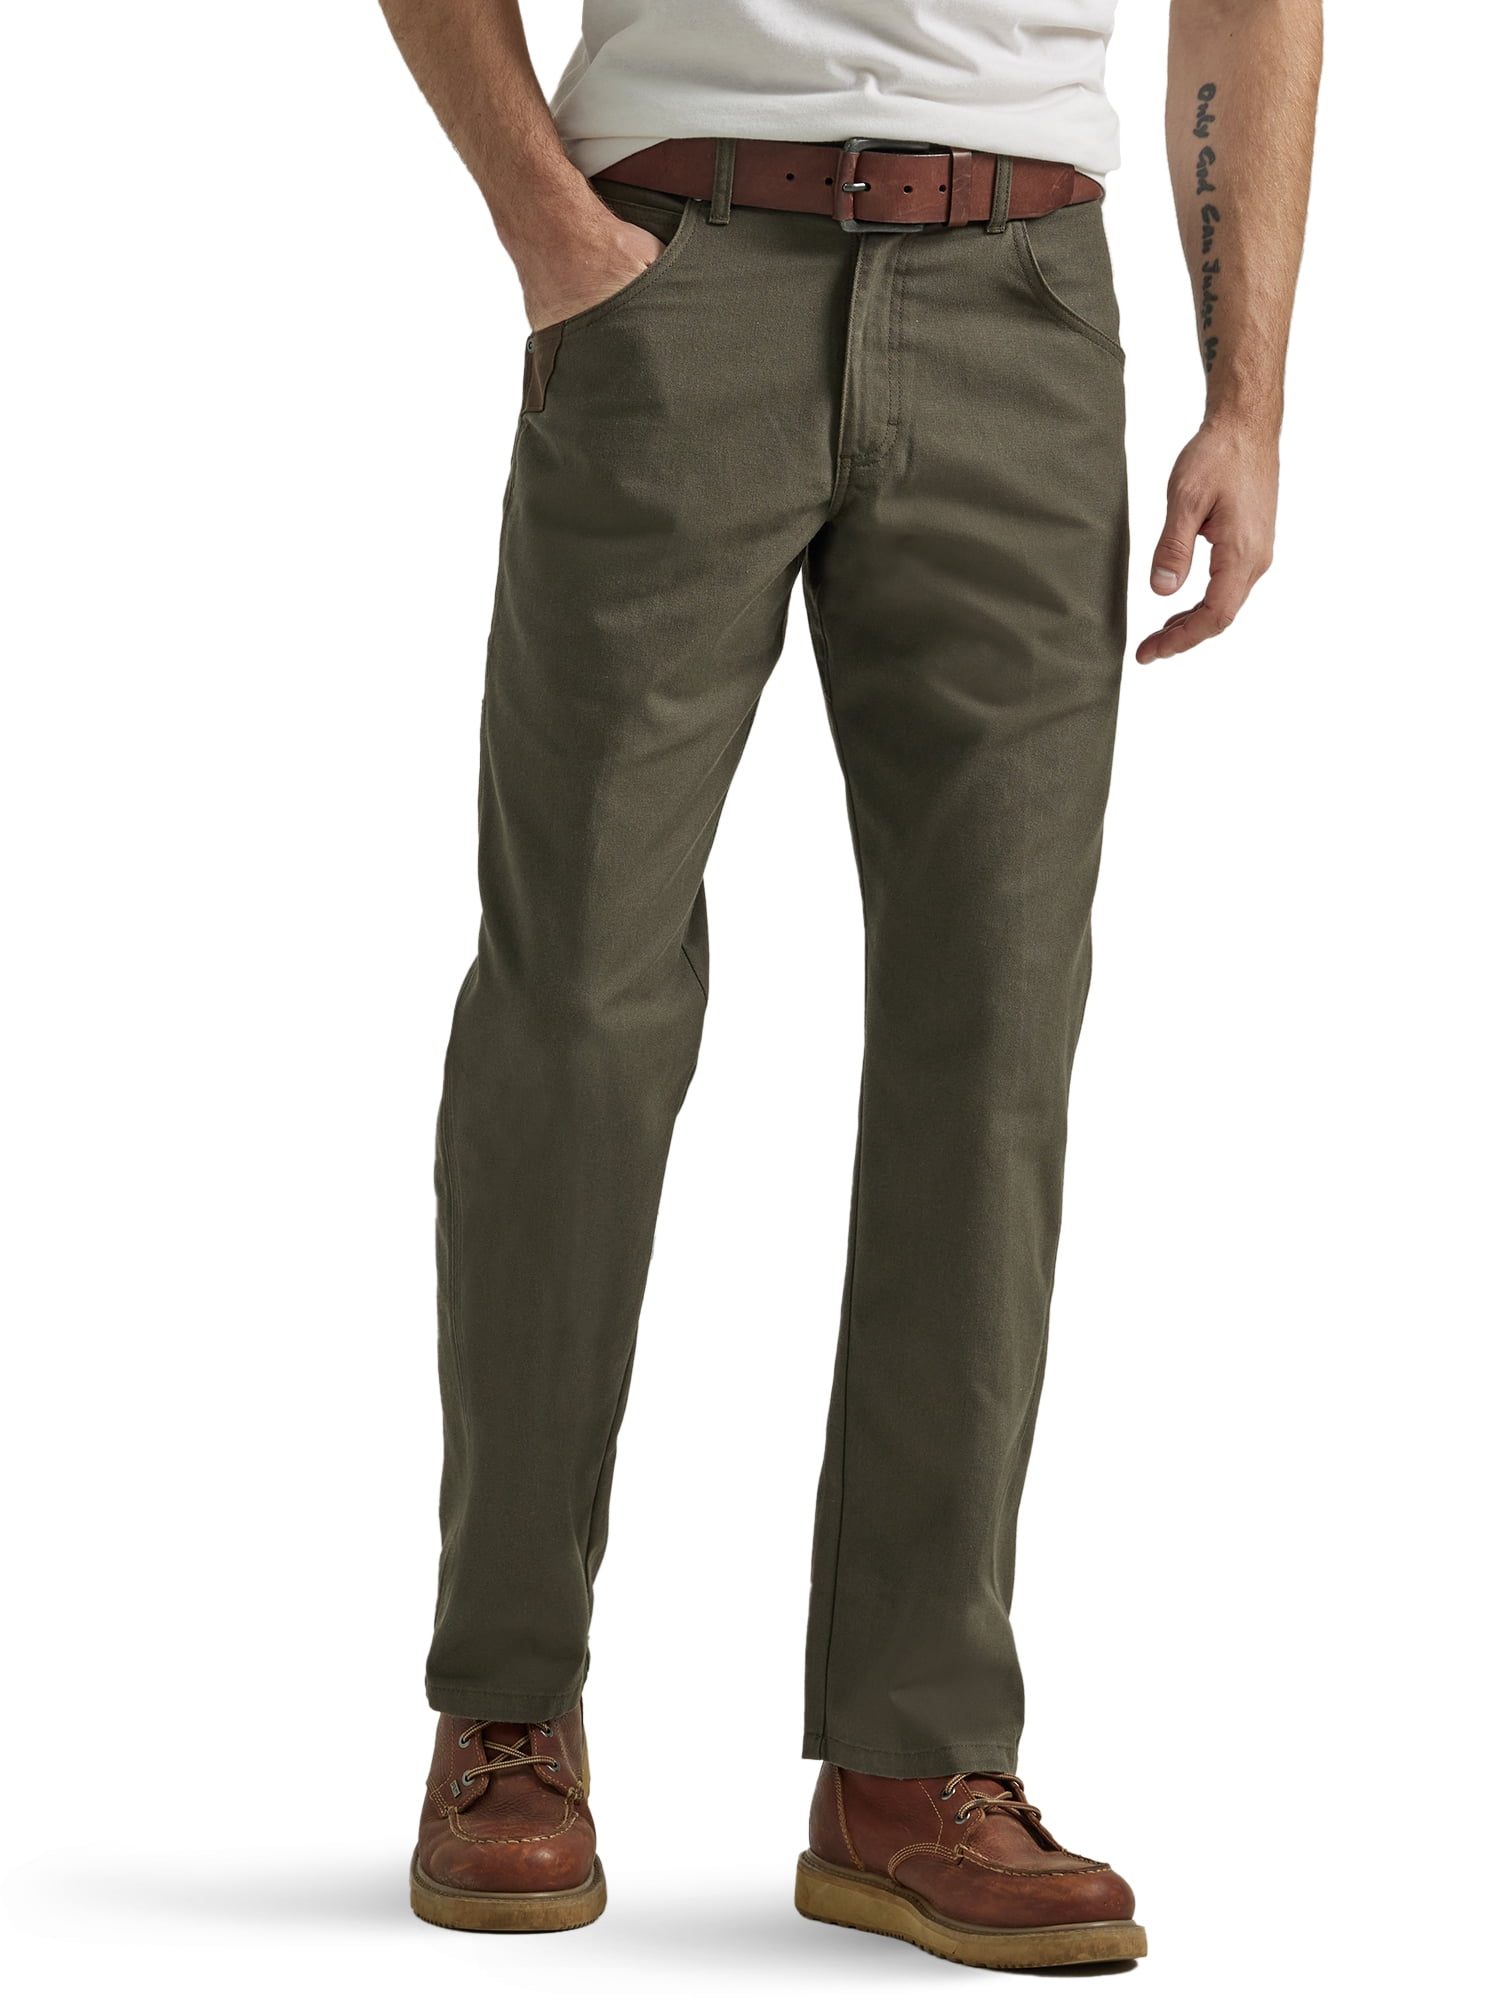 Wrangler Men's ATG Slim Fit Taper Synthetic Trail Jogger Pants - Caviar  30x30